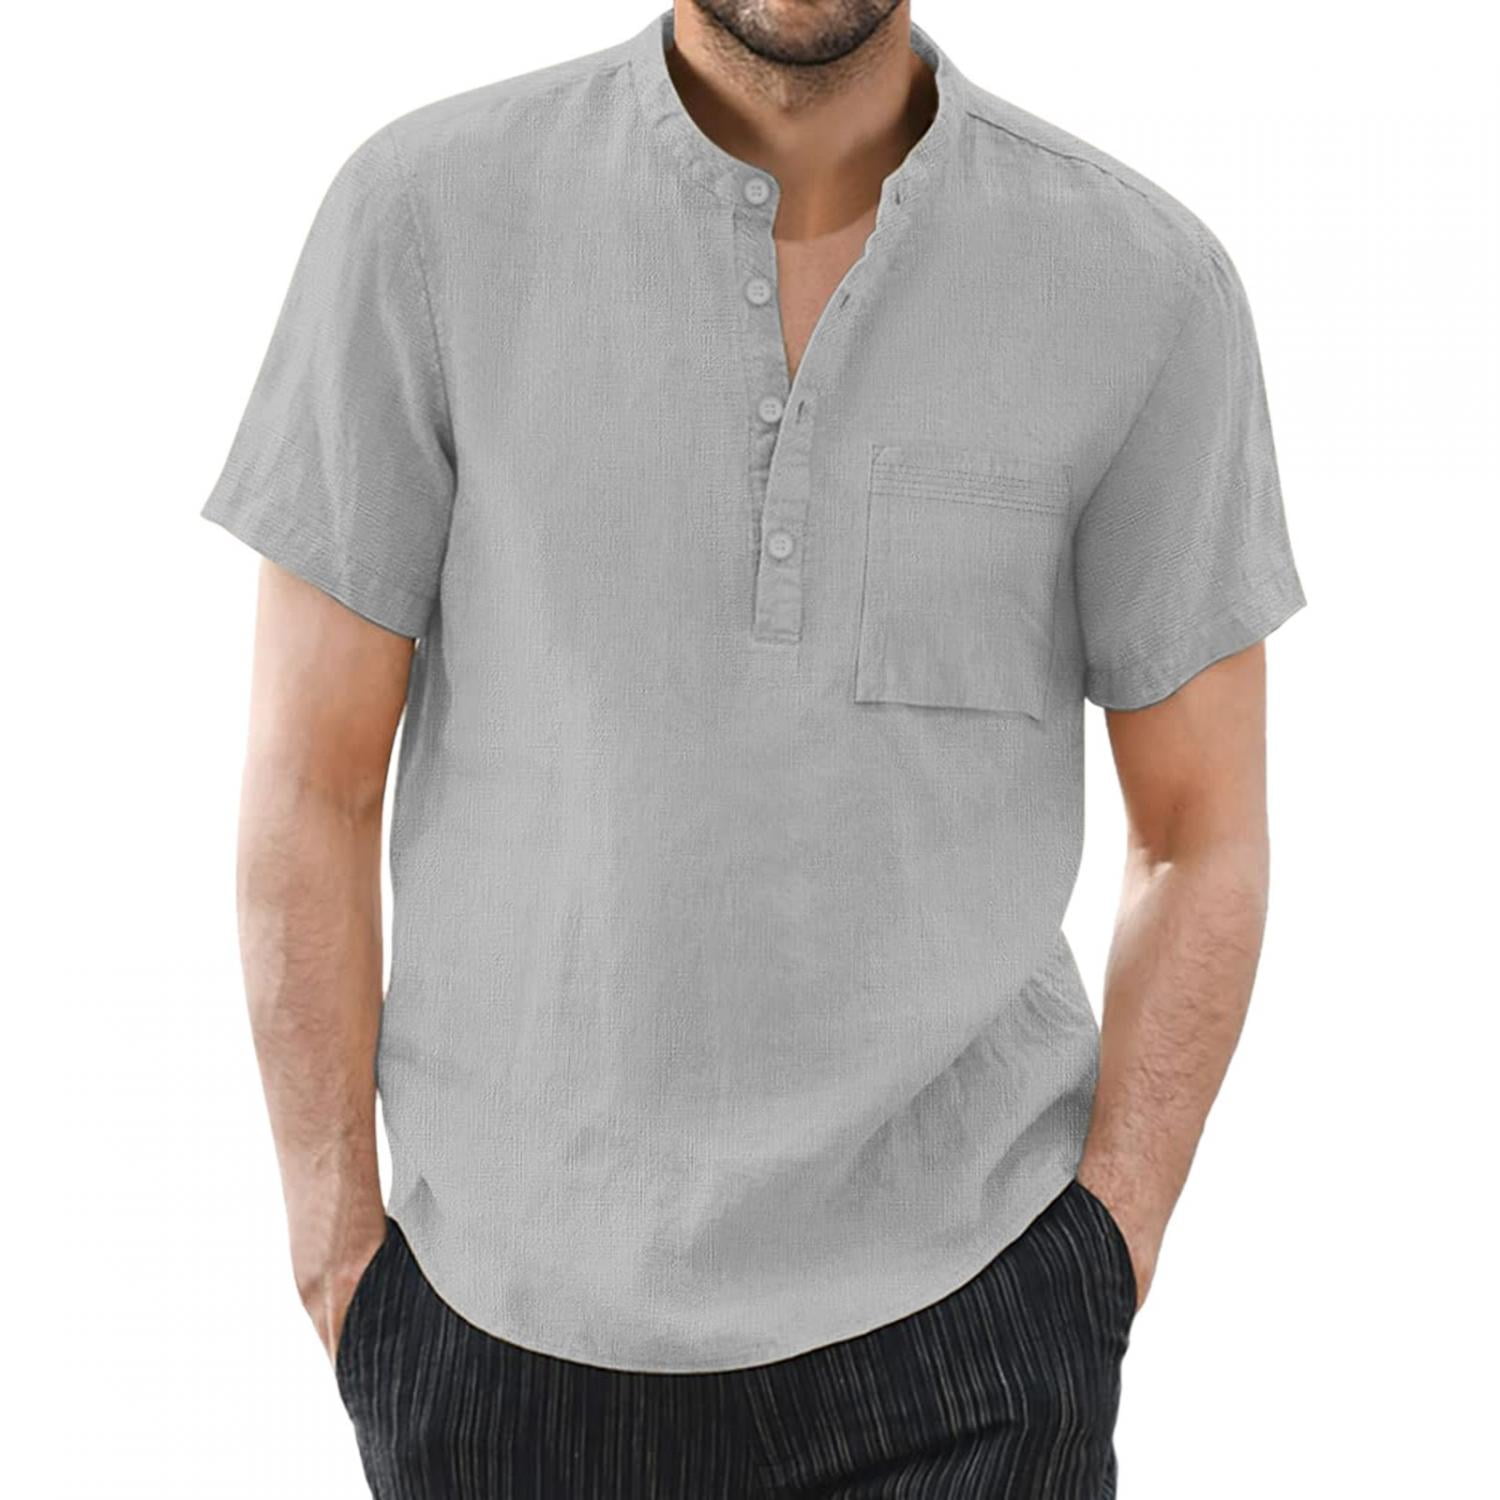 Men Polo T Shirts Cotton Short Sleeves T-shirt Collar Casual Summer Holiday Top 